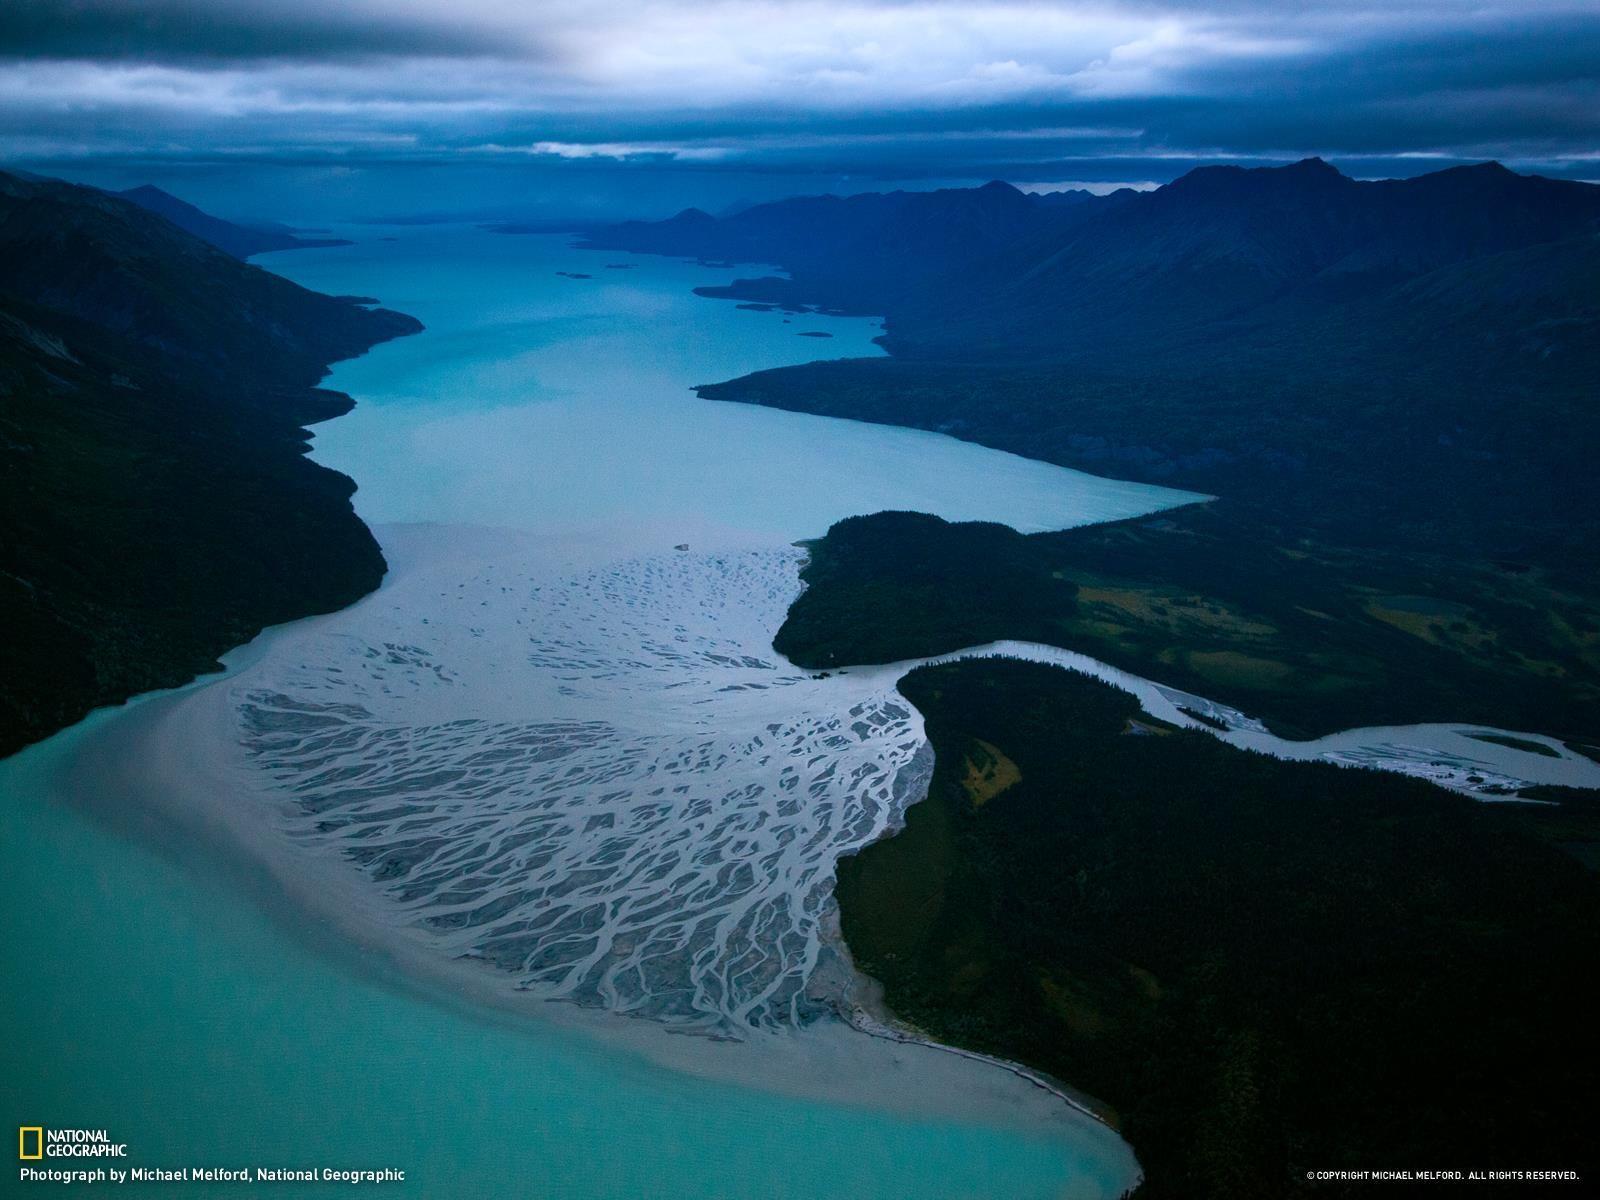 The Tlikakila River flows into Alaska's Lake Clark carrying ash